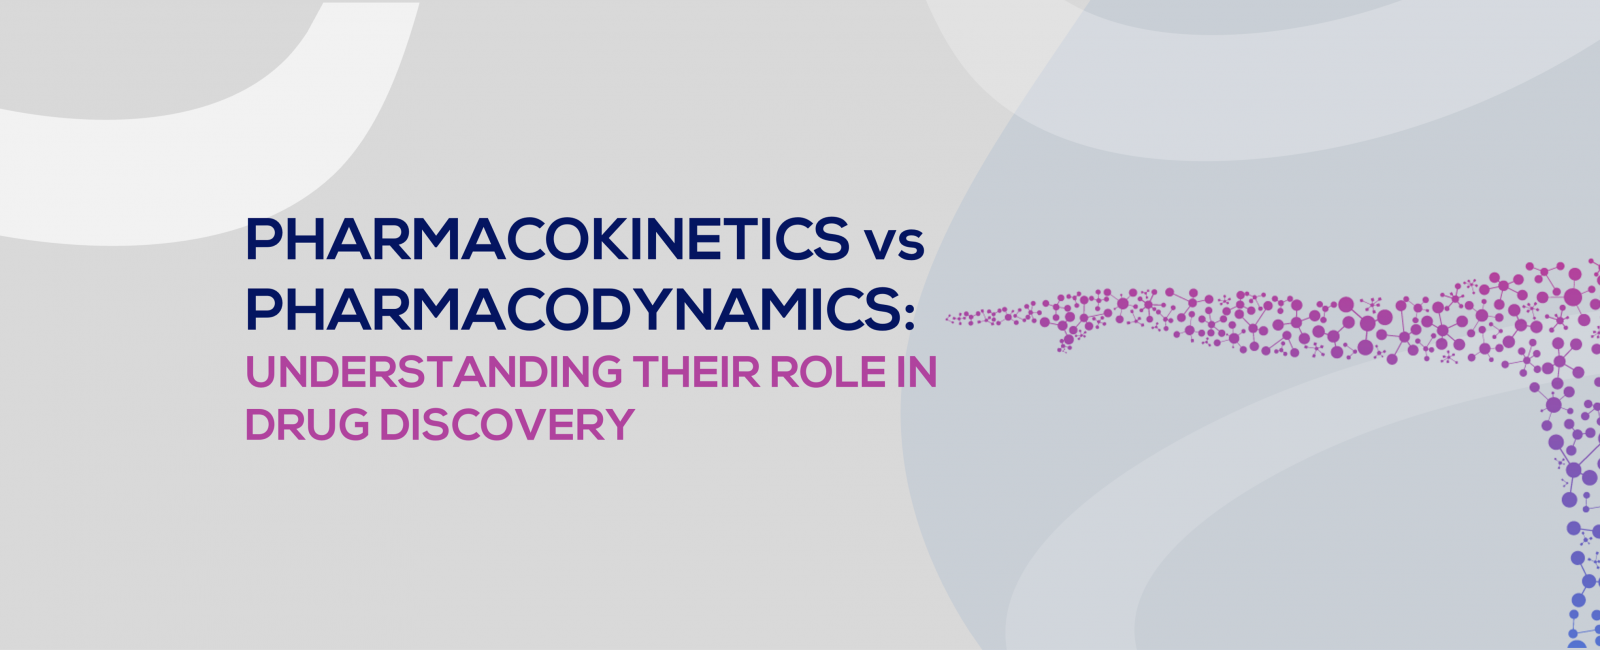 Pharmacokinetics vs Pharmacodynamics